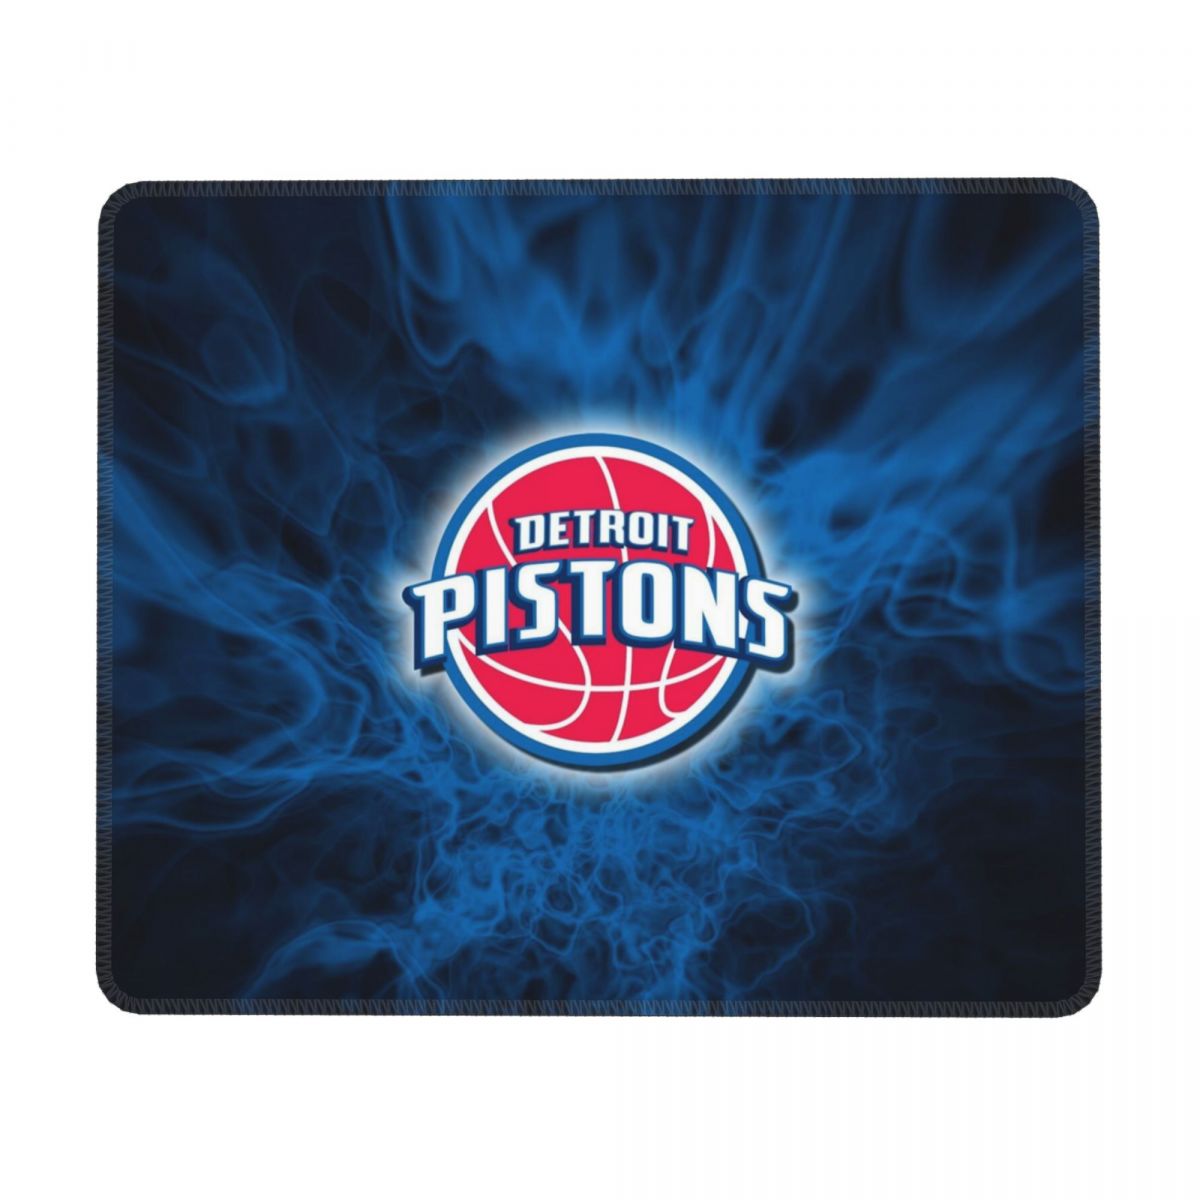 Detroit Pistons Flaming Blue Logo Square Rubber Base MousePads